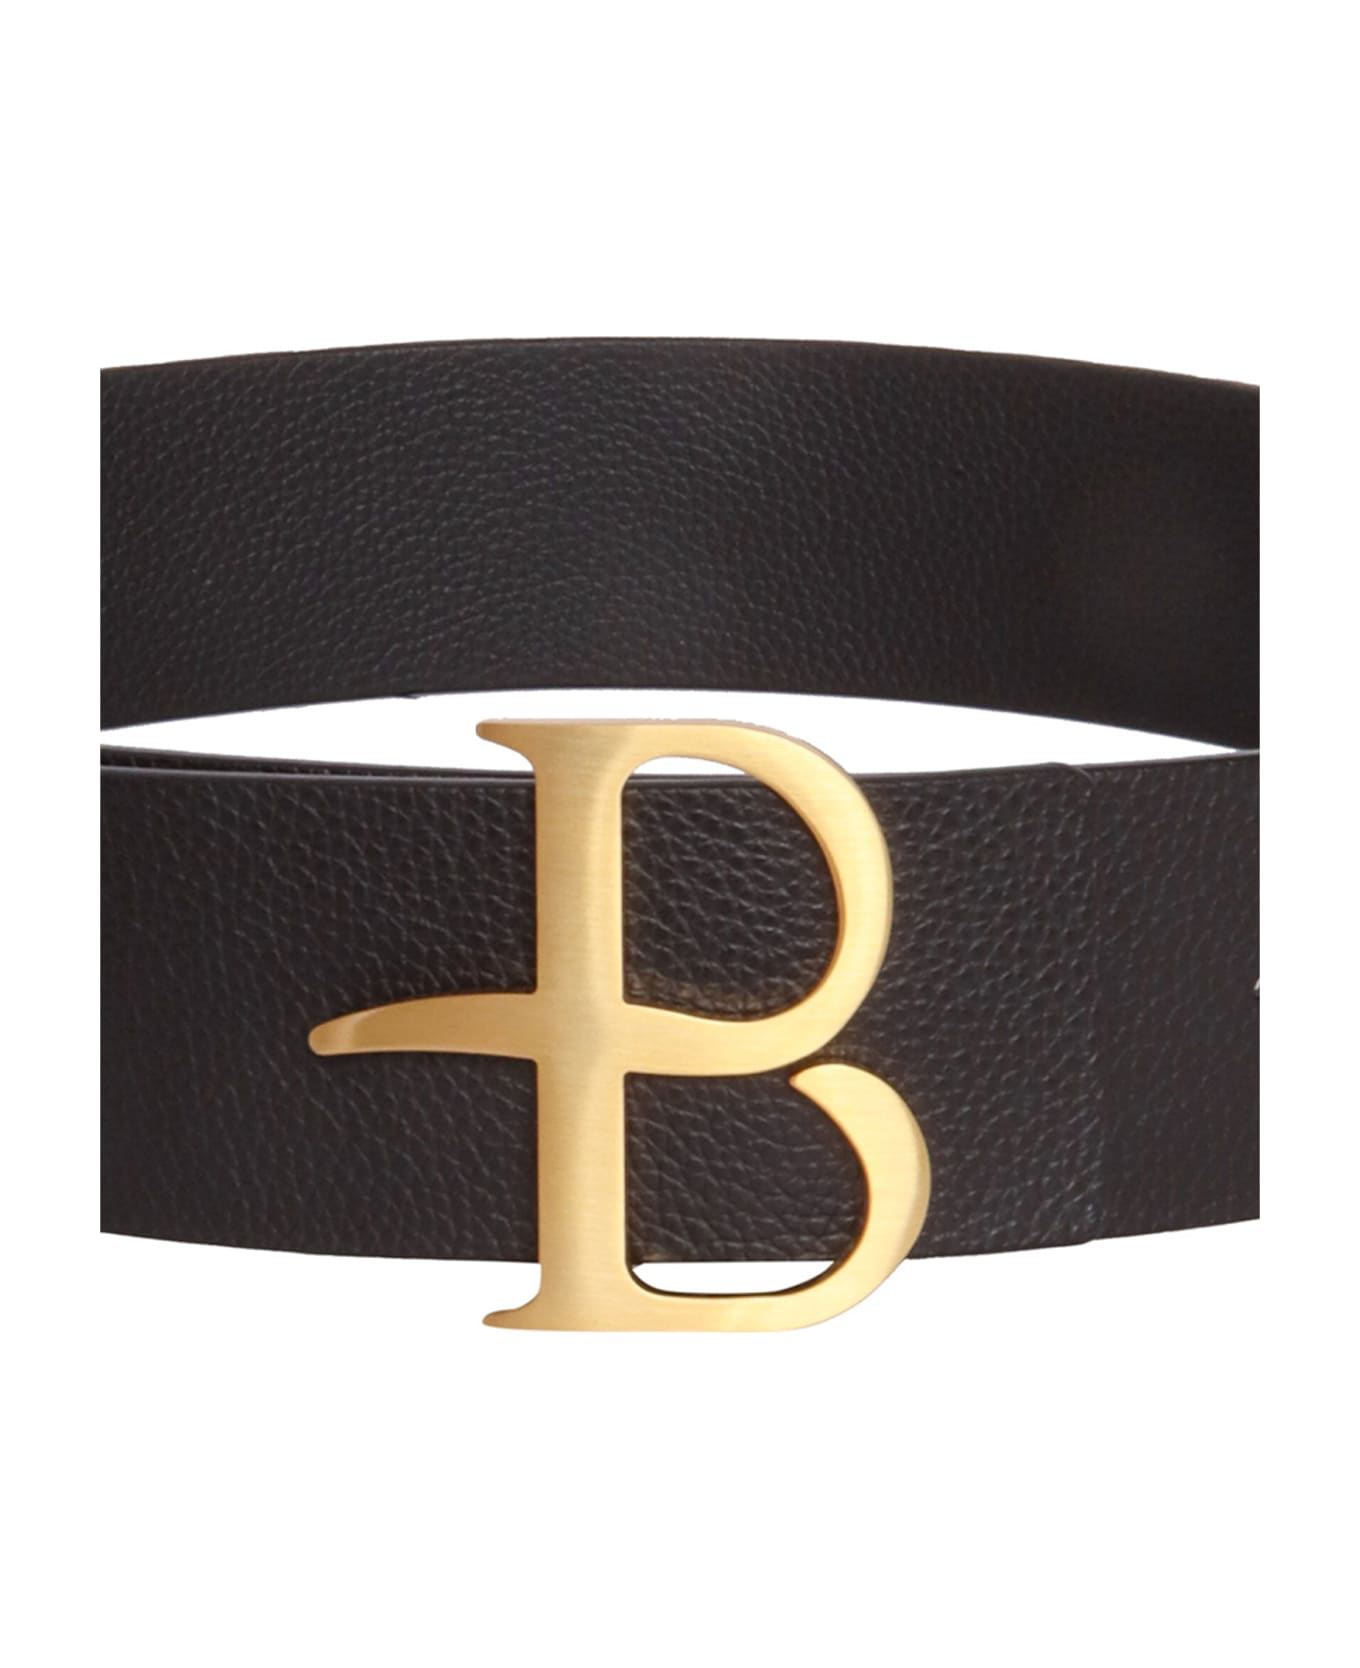 Ballantyne Logo Buckle Belt - BROWN